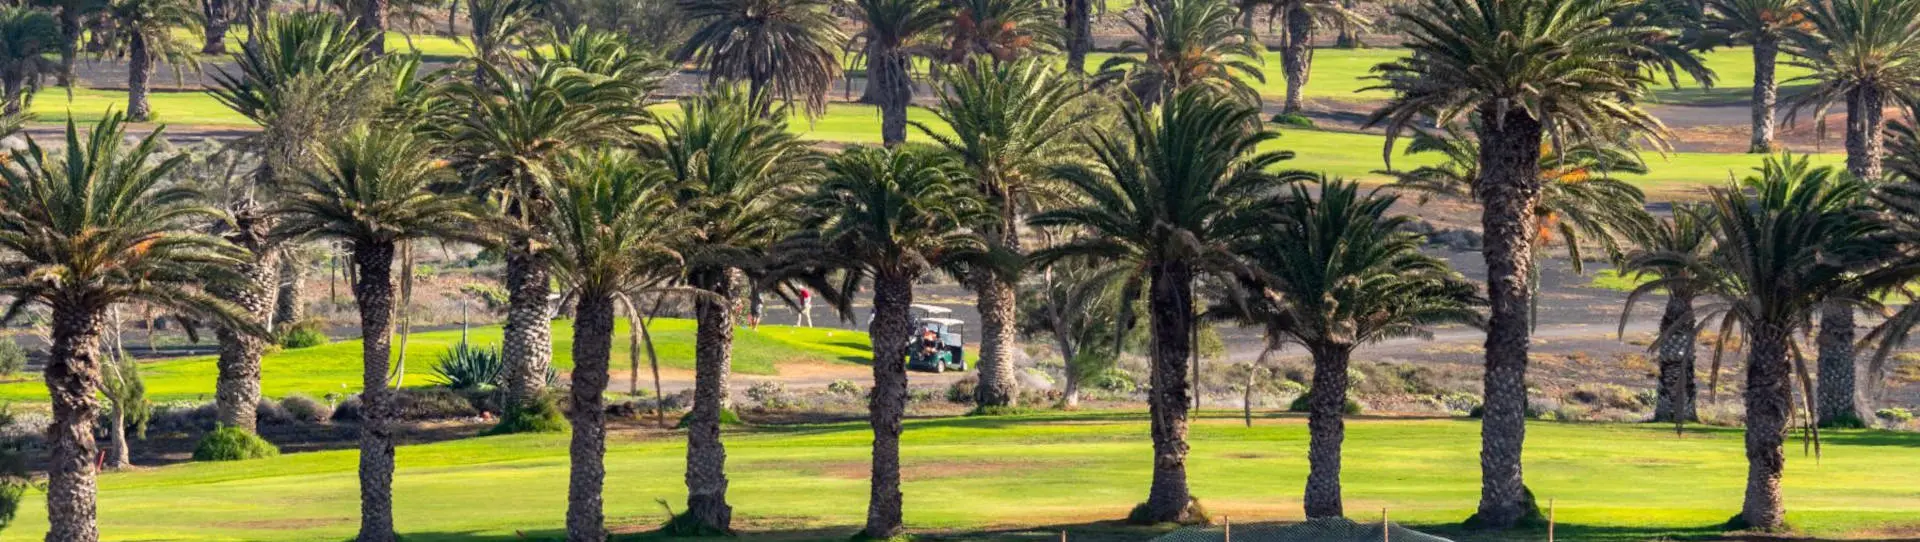 Spain golf holidays - Costa Teguise & Lanzarote Golf - Photo 2